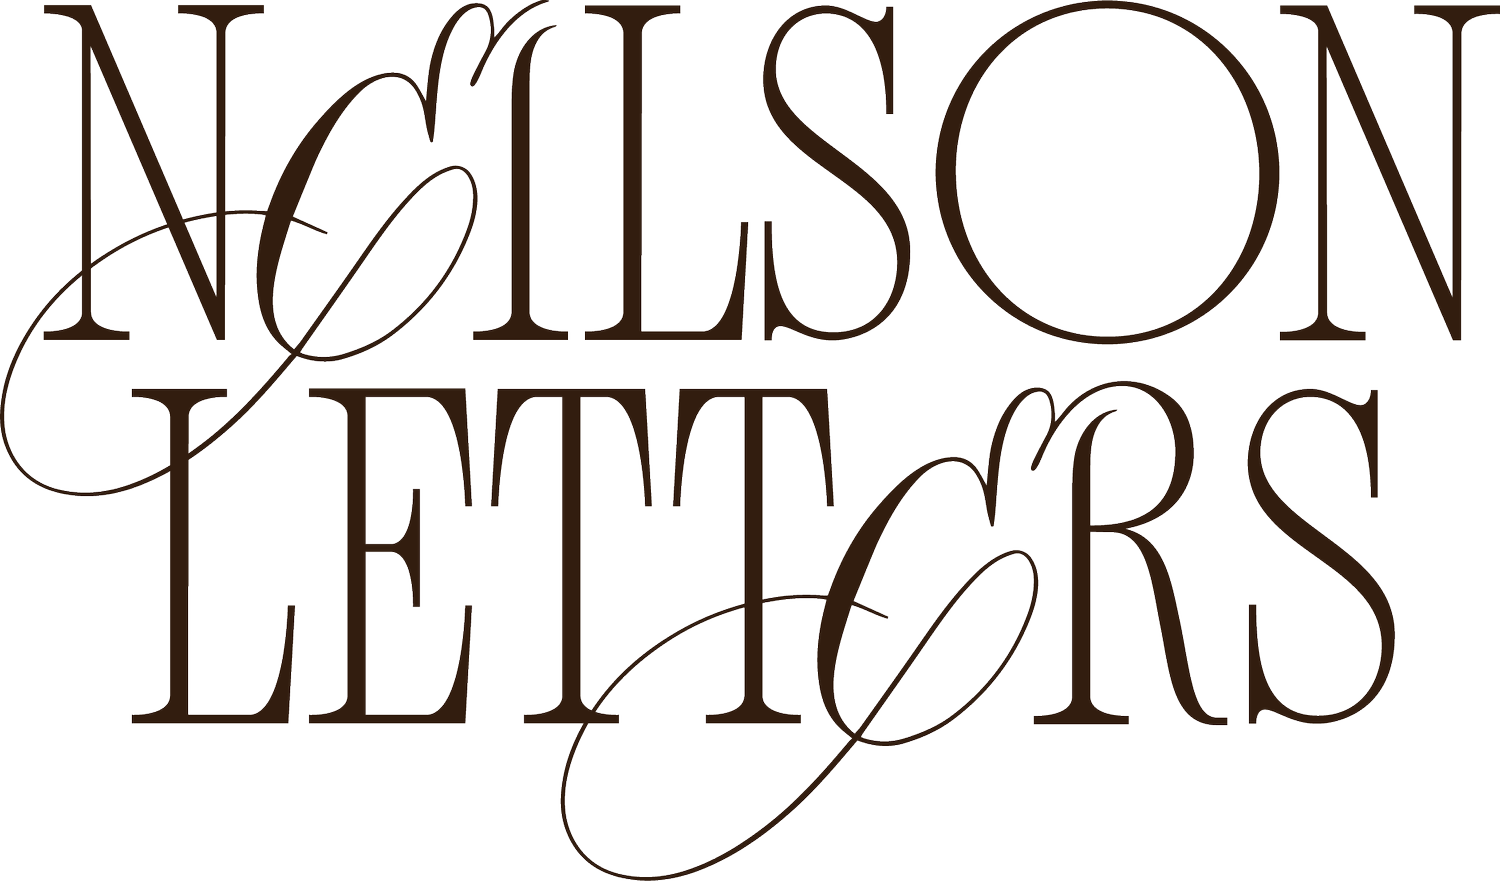 Neilson Letters